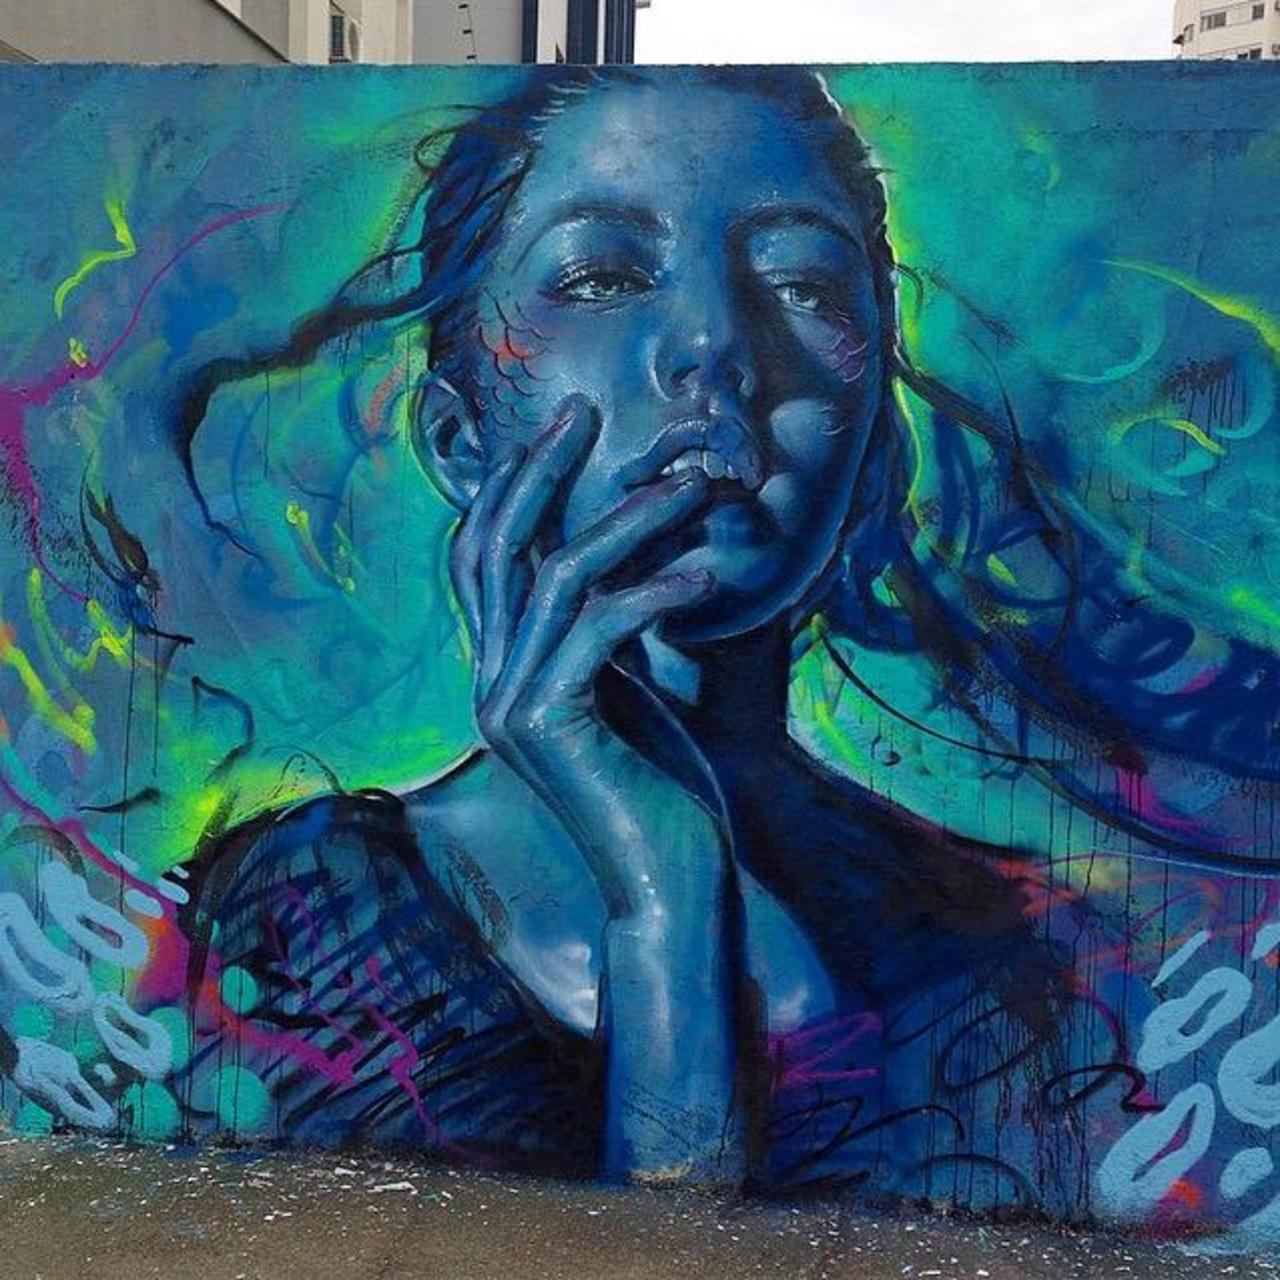 Thiago Valdi new Street Art piece titled 'Day Dreamer'

#art #mural #graffiti #streetart http://t.co/NjZAjGkOf3